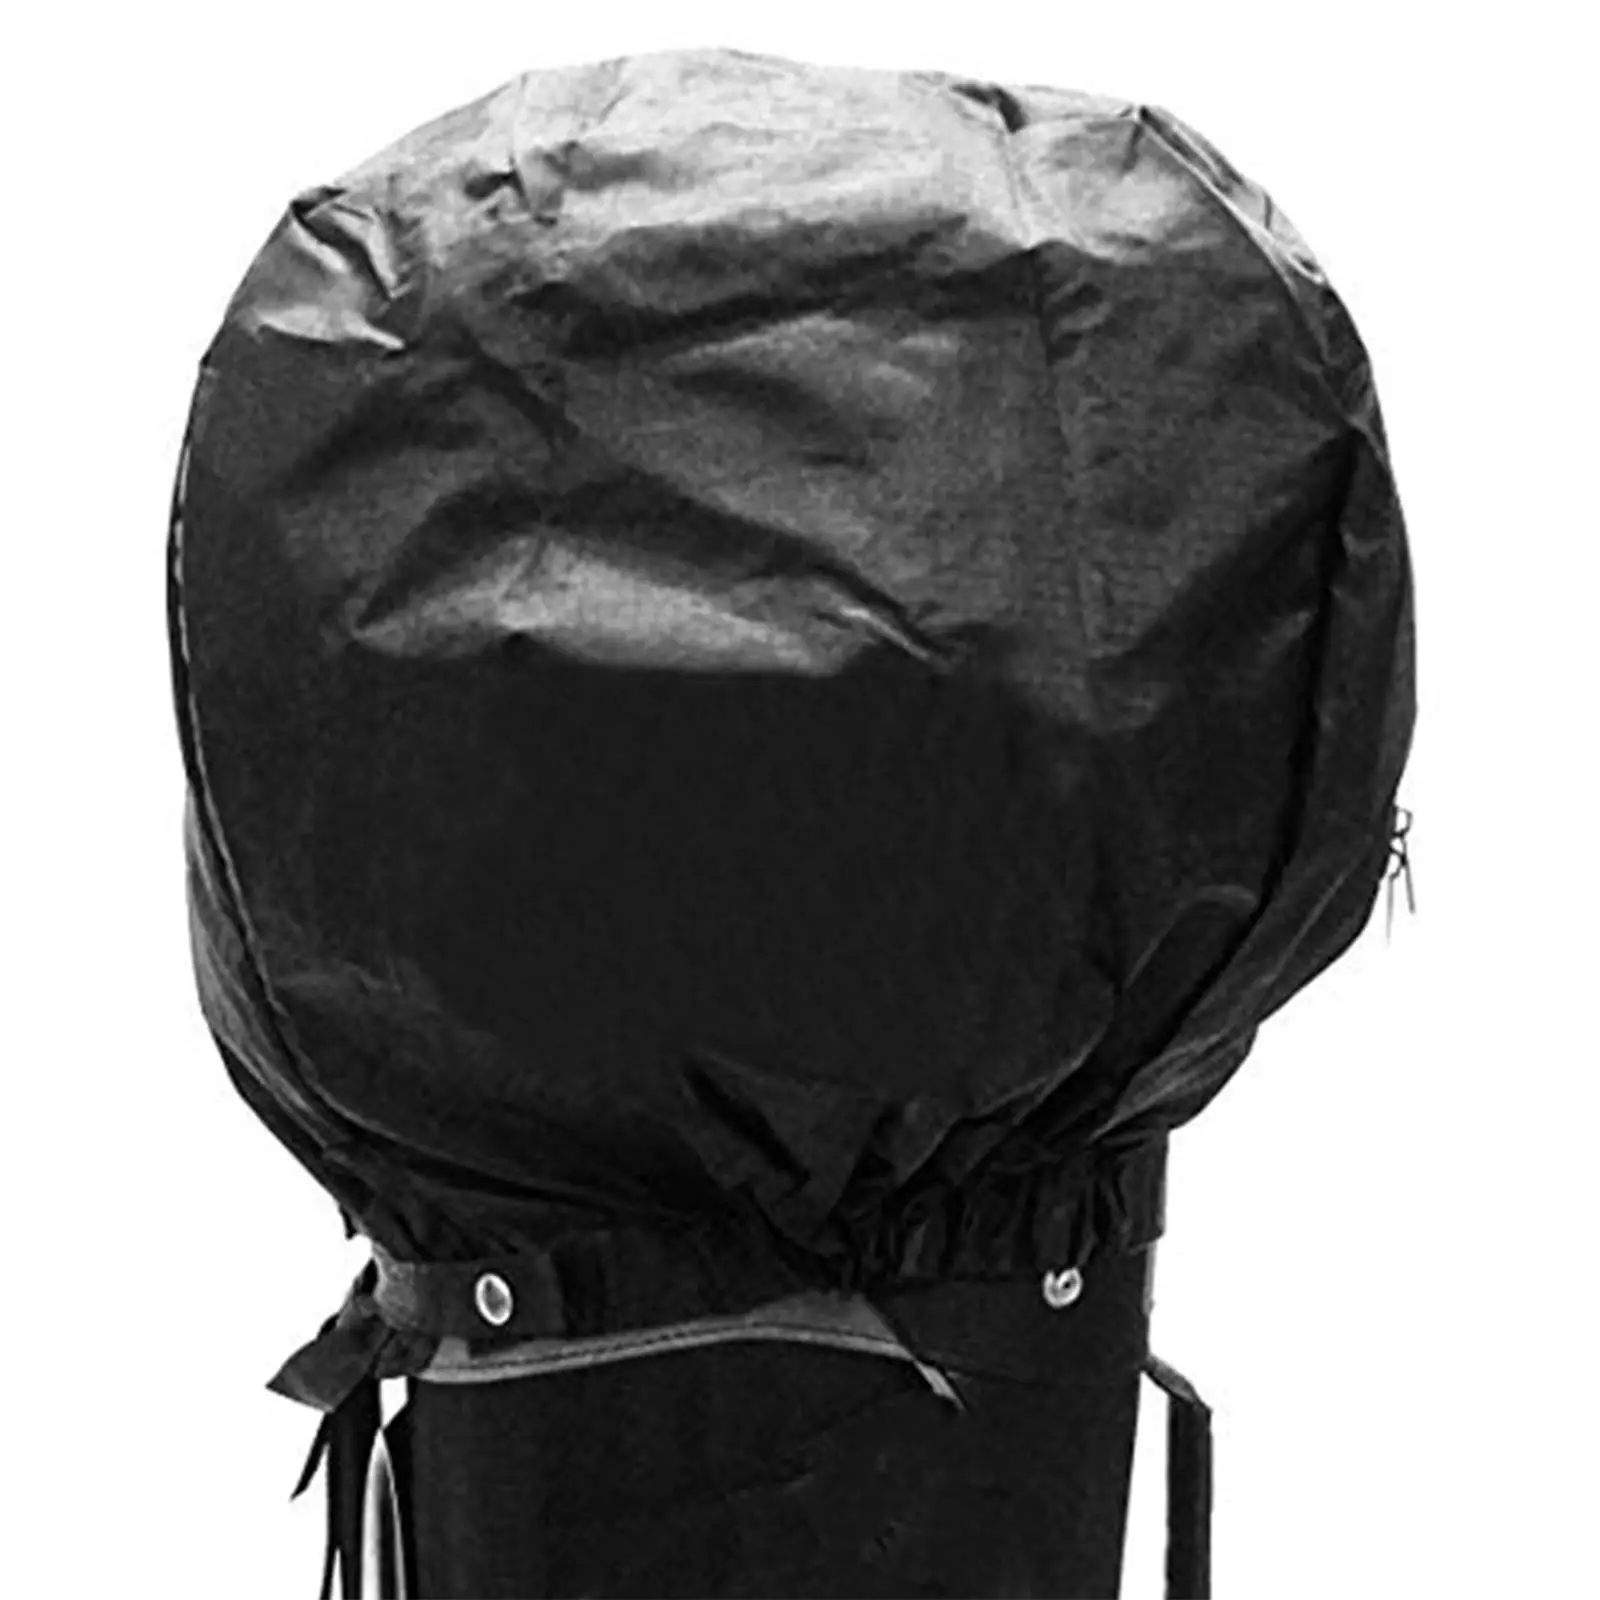 Portable Golf Bag Rain Cover for Golf Push Carts Protective Black Accesory Case Rain Cape Rain coverage for Winter Golf Cart